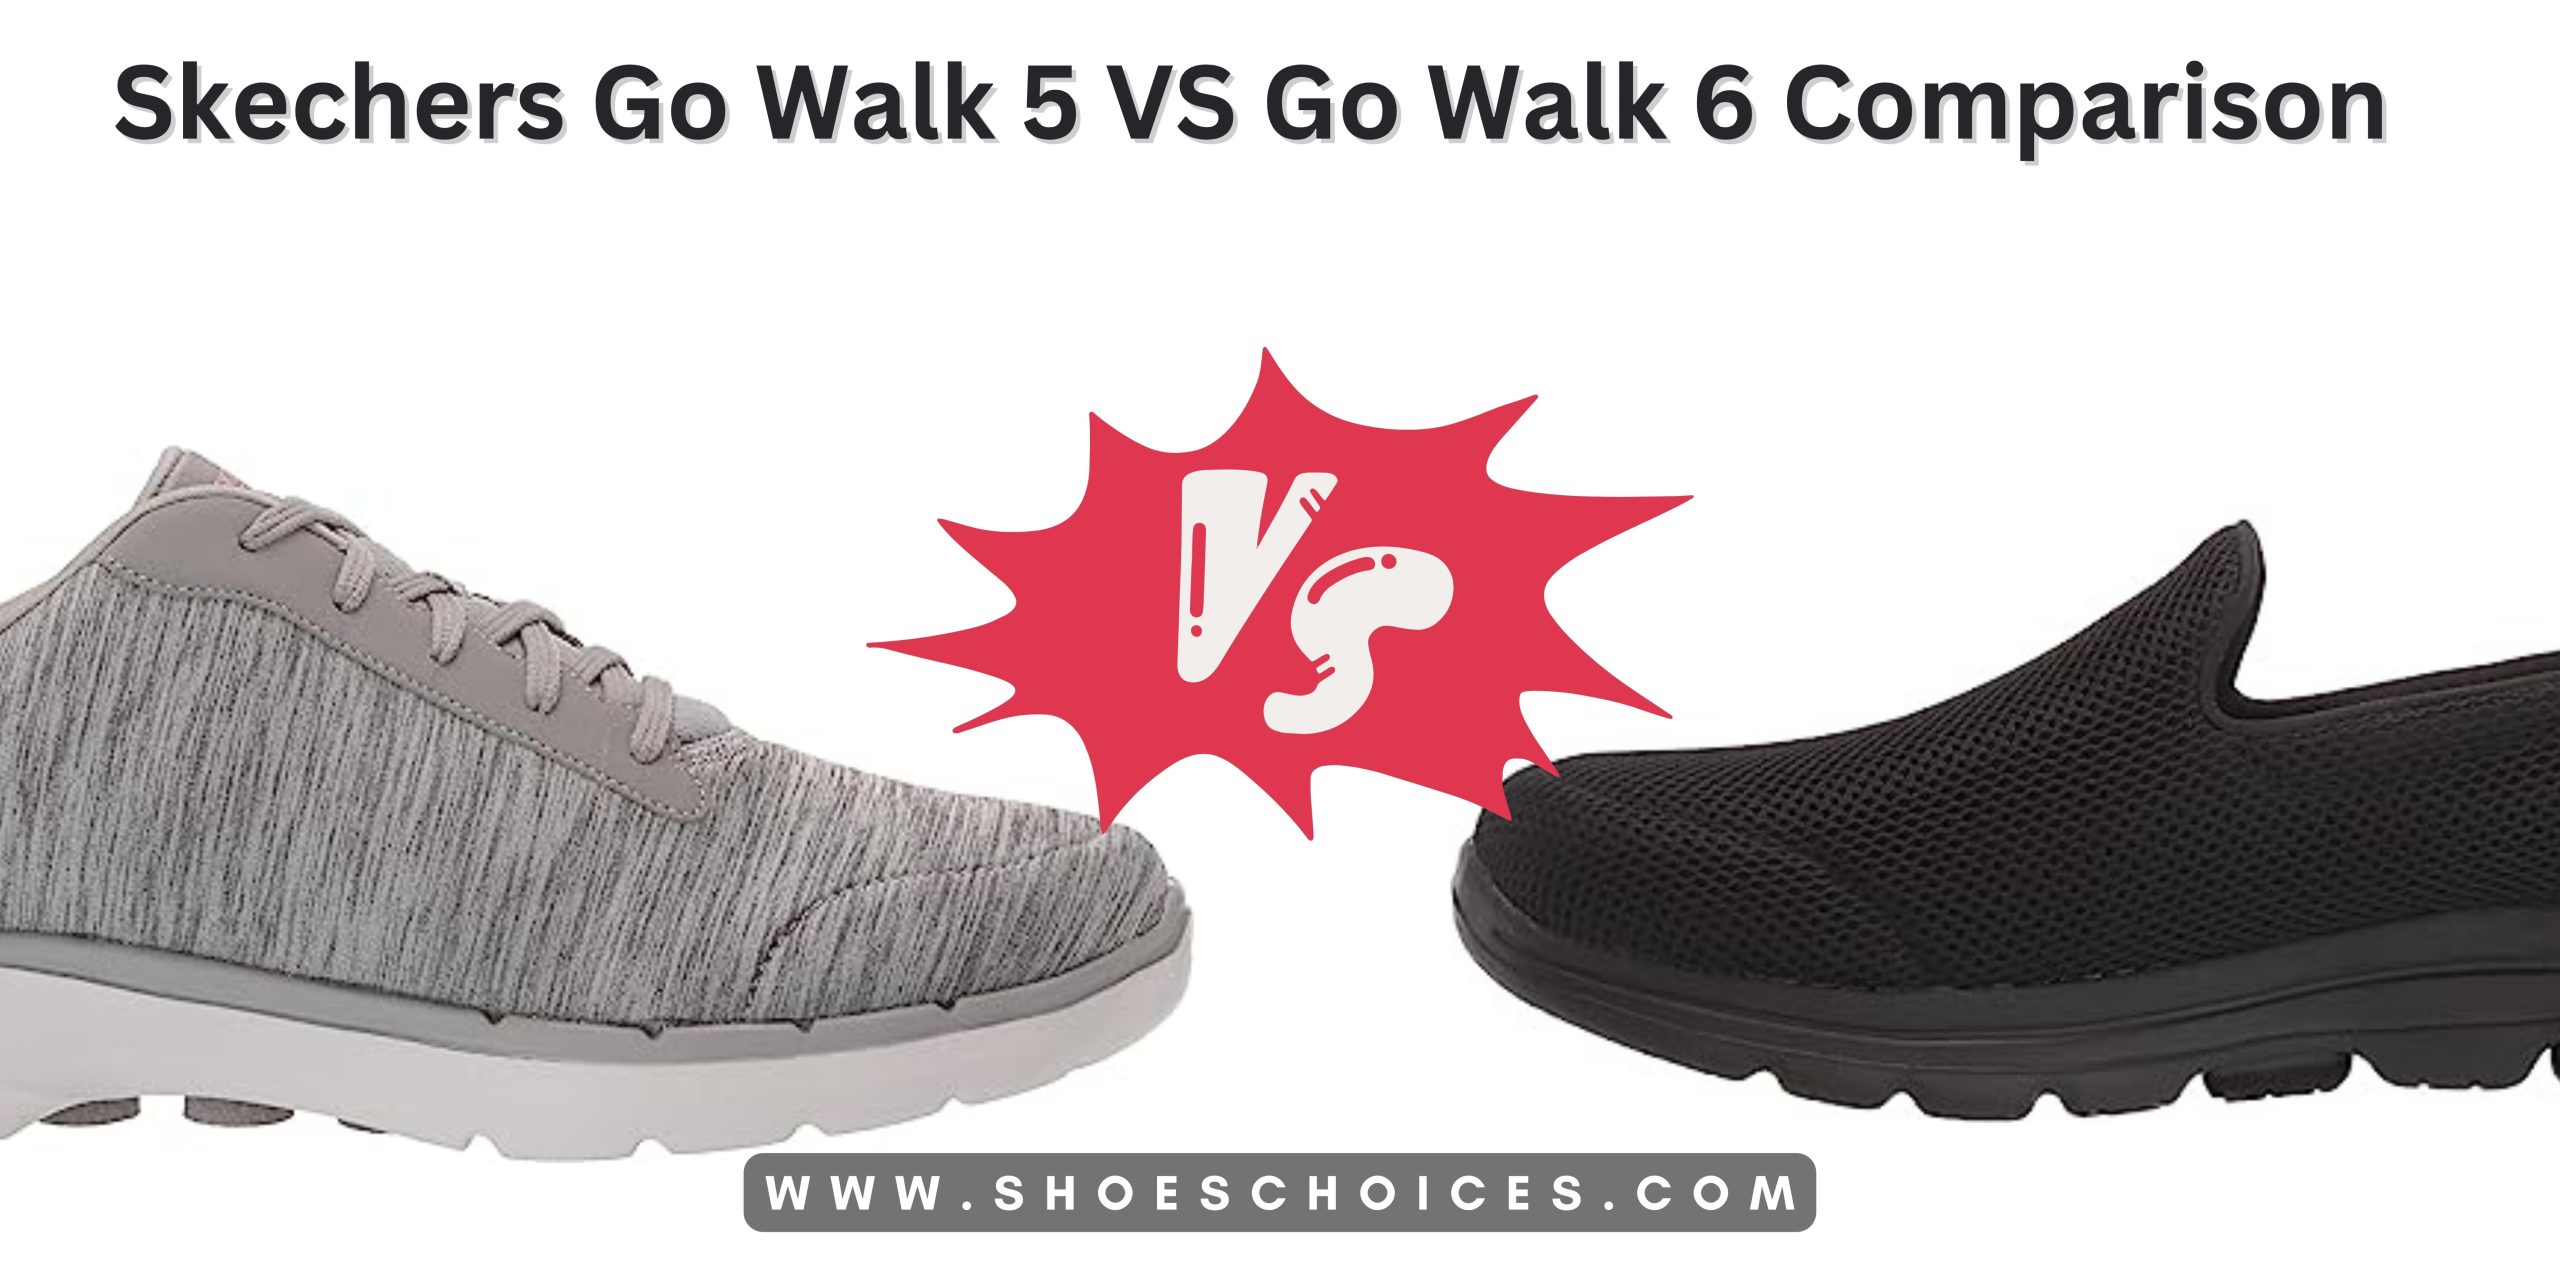 Skechers Go Walk 5 VS Go Walk 6